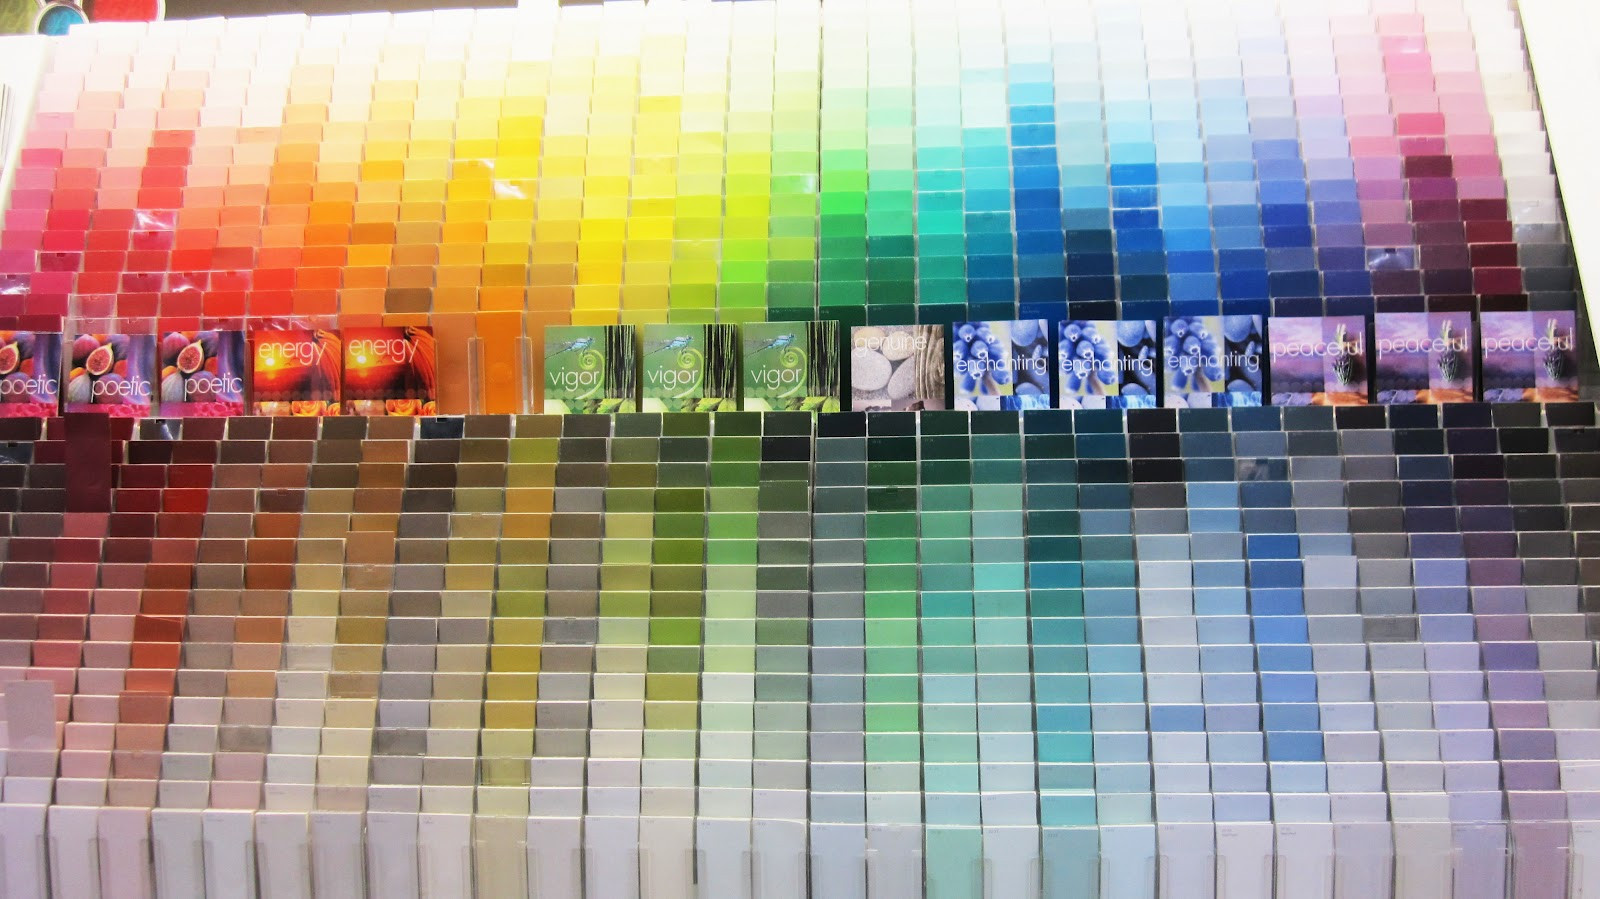 Best ideas about Home Depot Paint Colors
. Save or Pin Home Depot Disney Paint Colors Now.